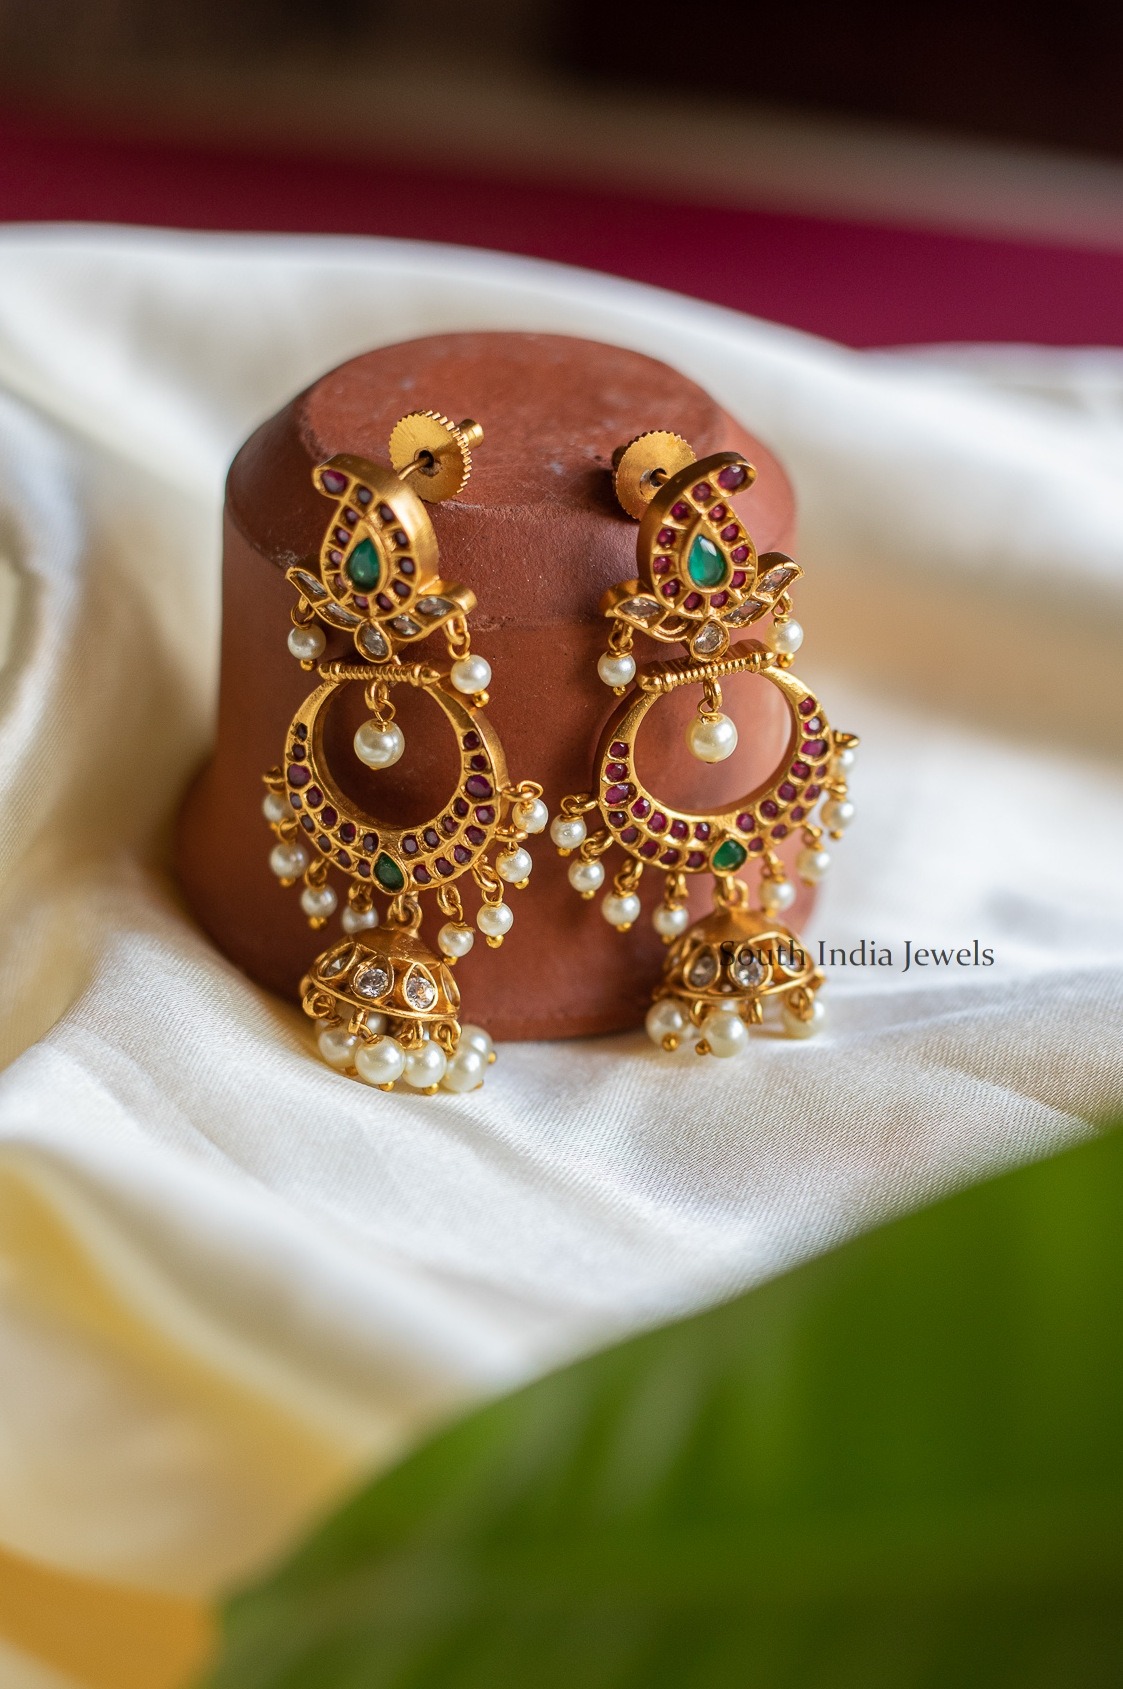 Latest Chandbali Design Earrings - South Inida Jewels